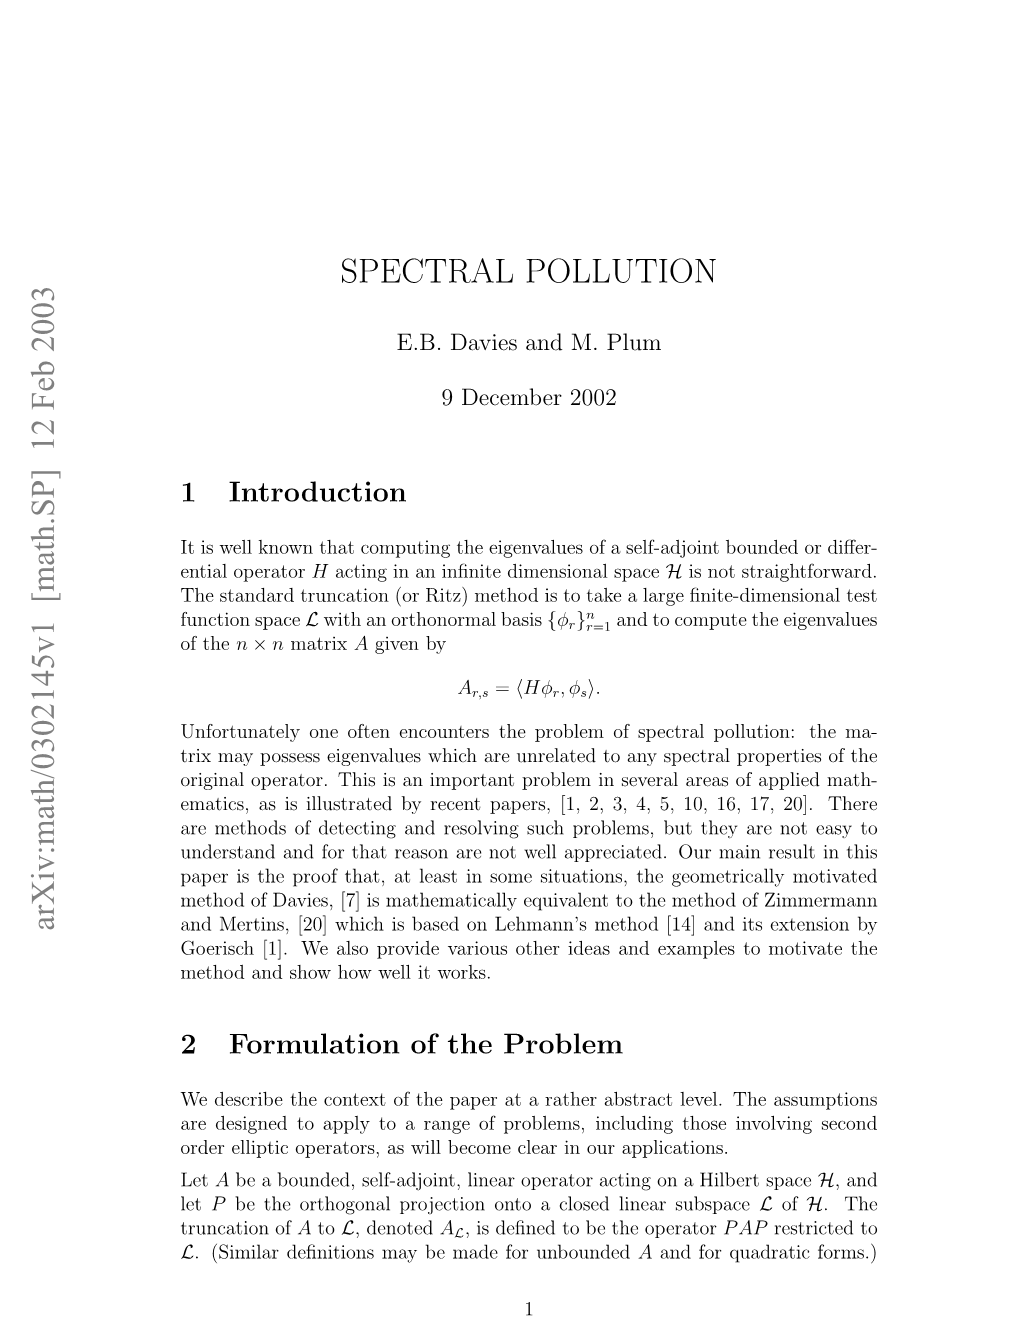 [Math.SP] 12 Feb 2003 SPECTRAL POLLUTION